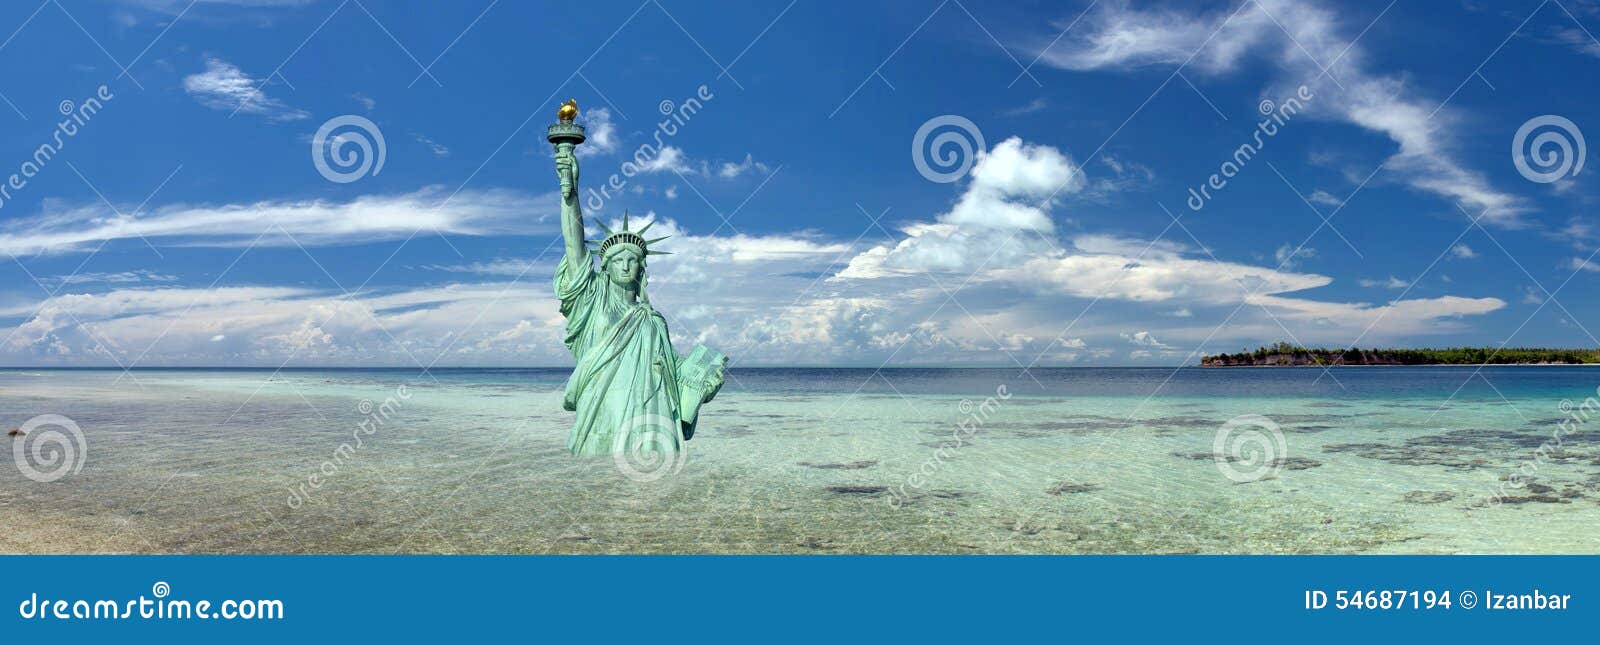 Escena nuclear de la apocalipsis de New York Post con la estatua de la libertad en la playa